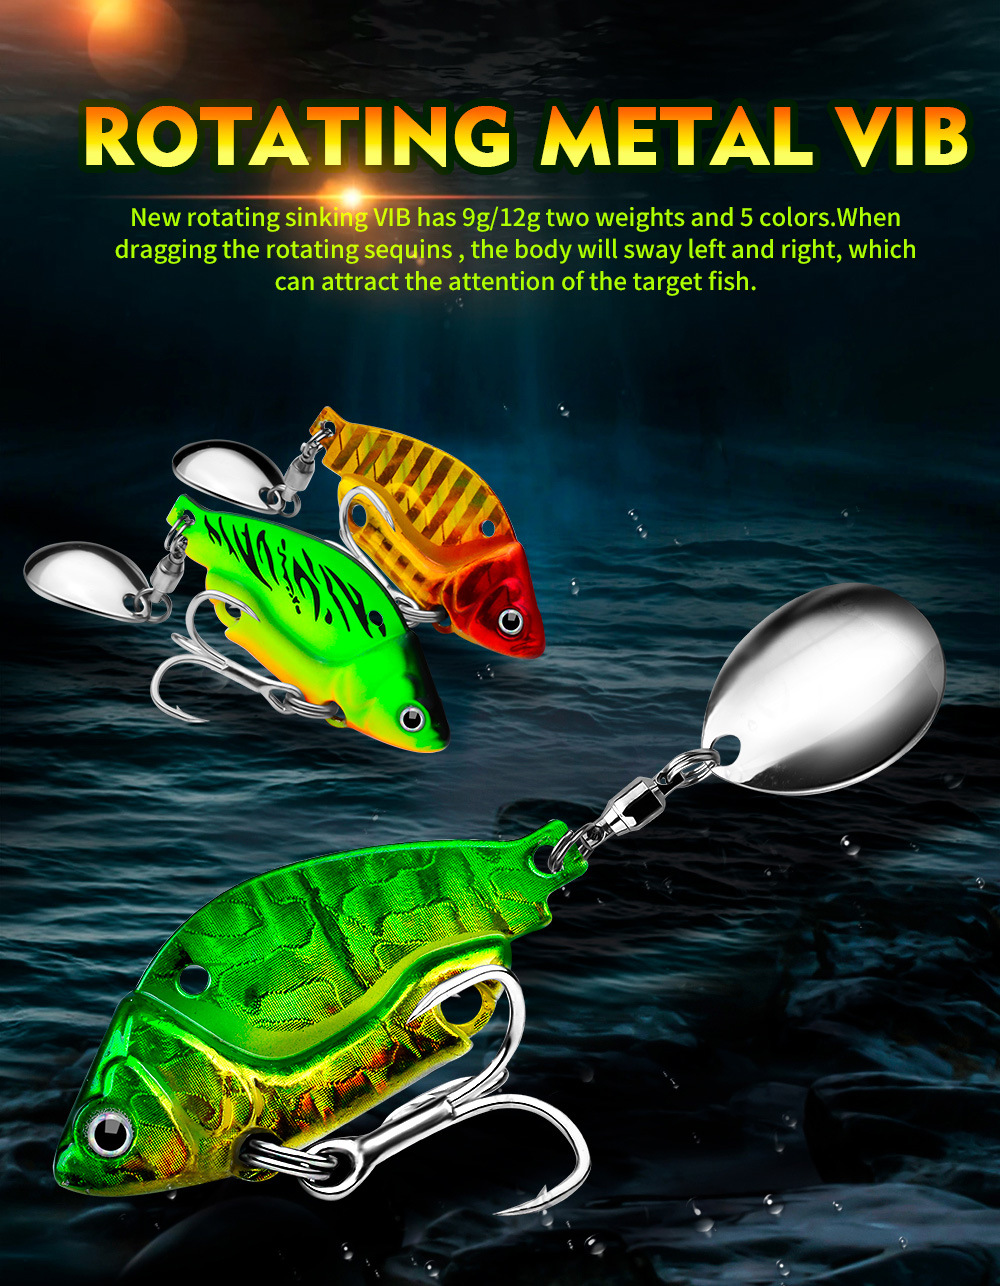 6pcs Metal Vib Blade Lure Fishing Lures 5g 7g 10g 12g 3D Eyes